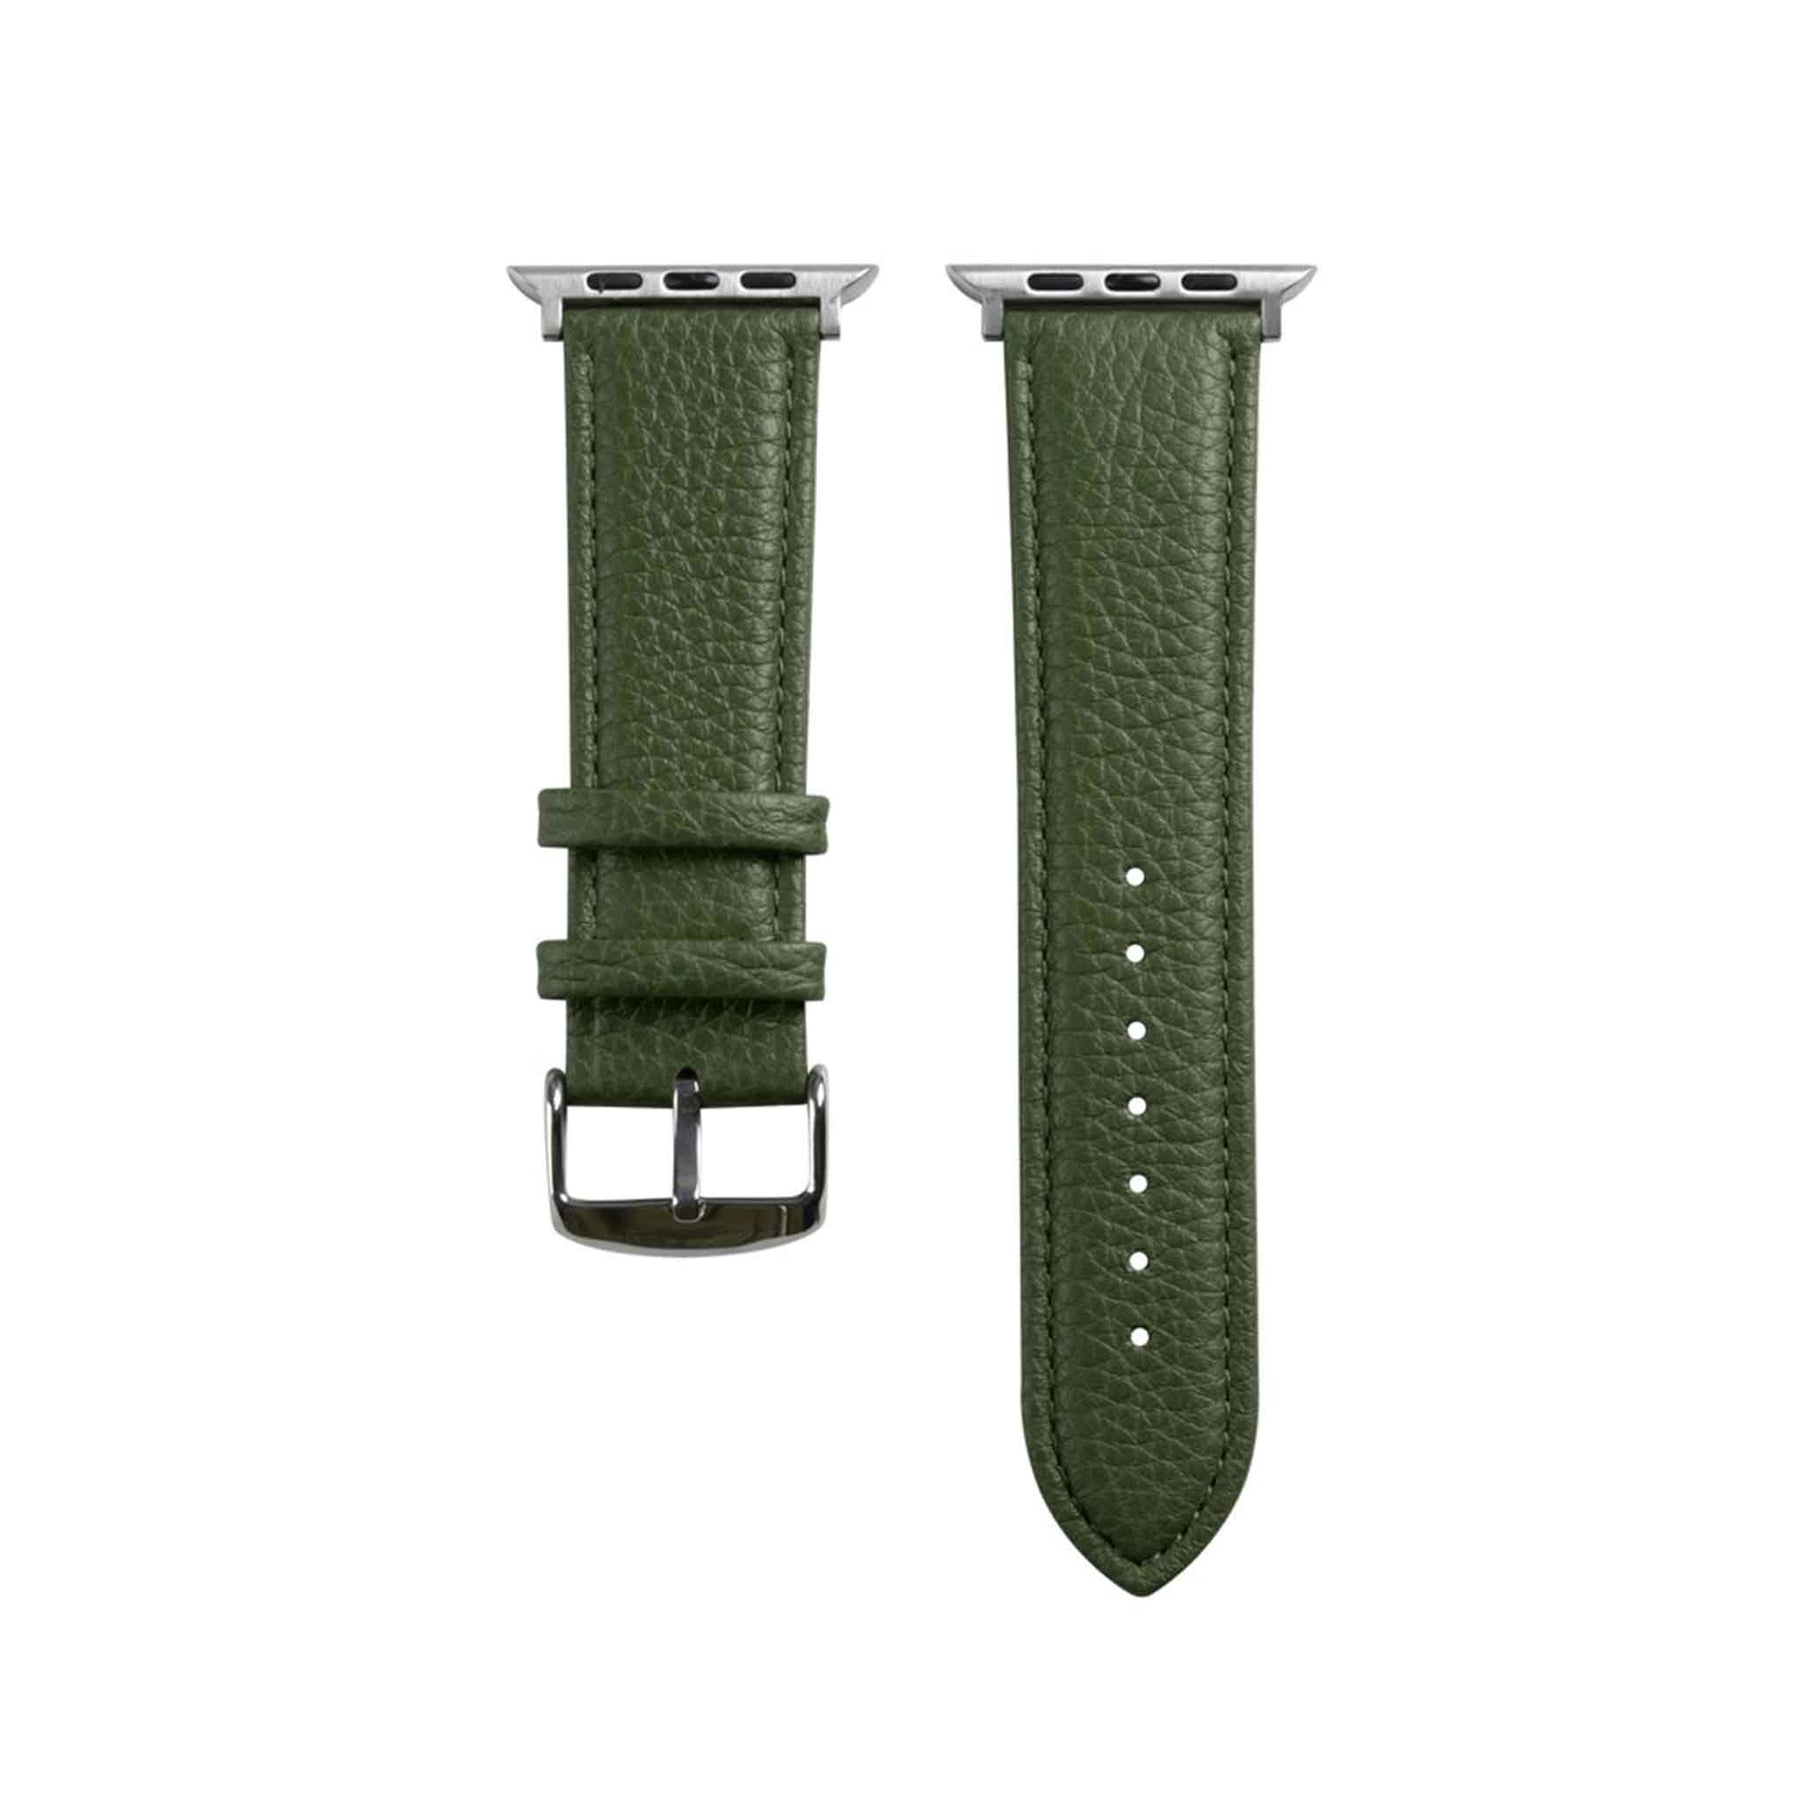 Apple Watch - Leather Wristband